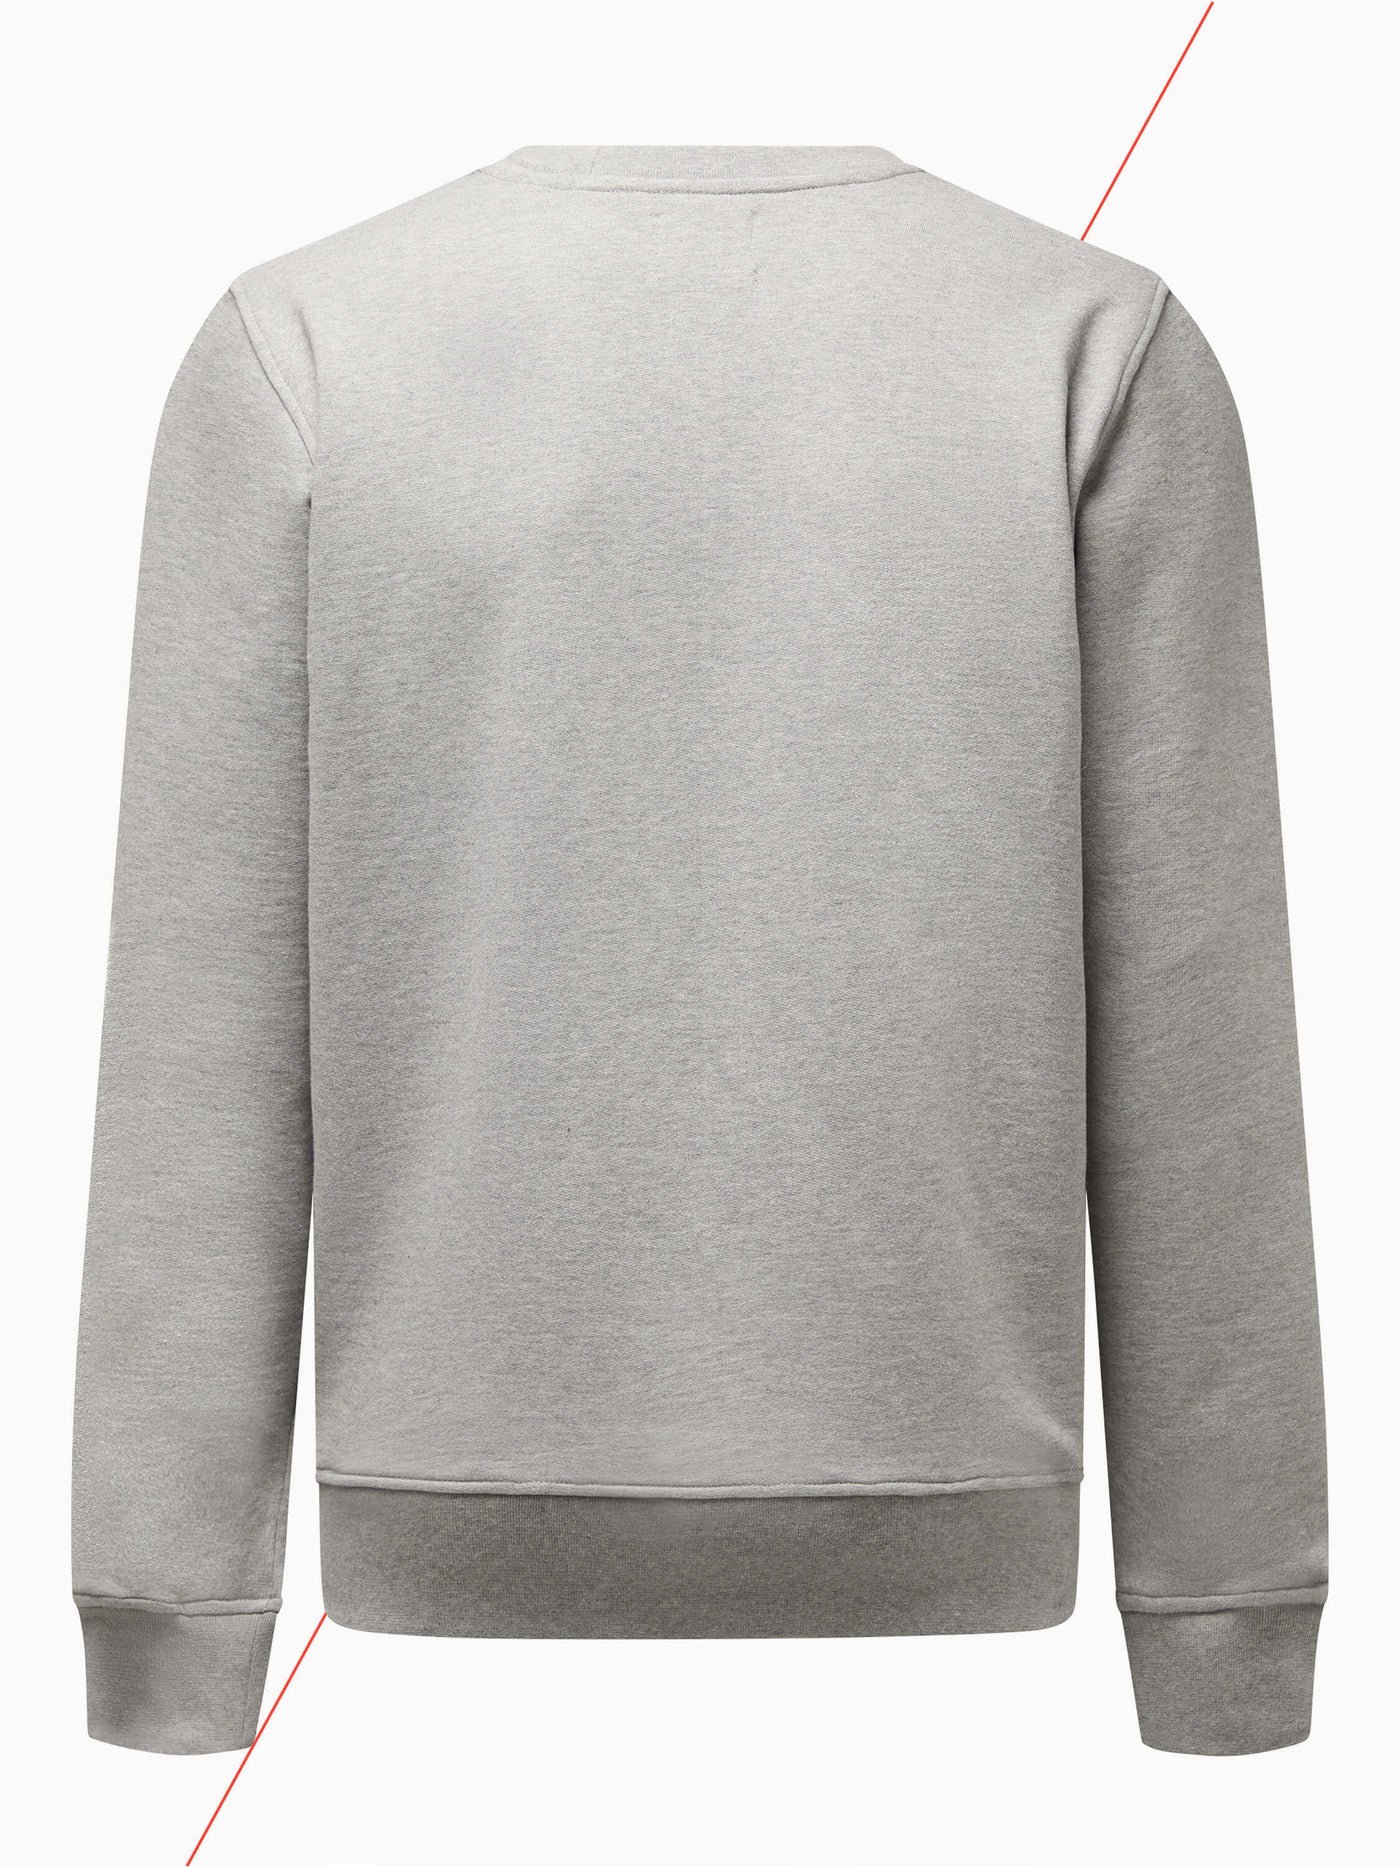 CHPT3 Elysée women's crewneck sweatshirt in grey, viewed from the rear #color_grey-marl  